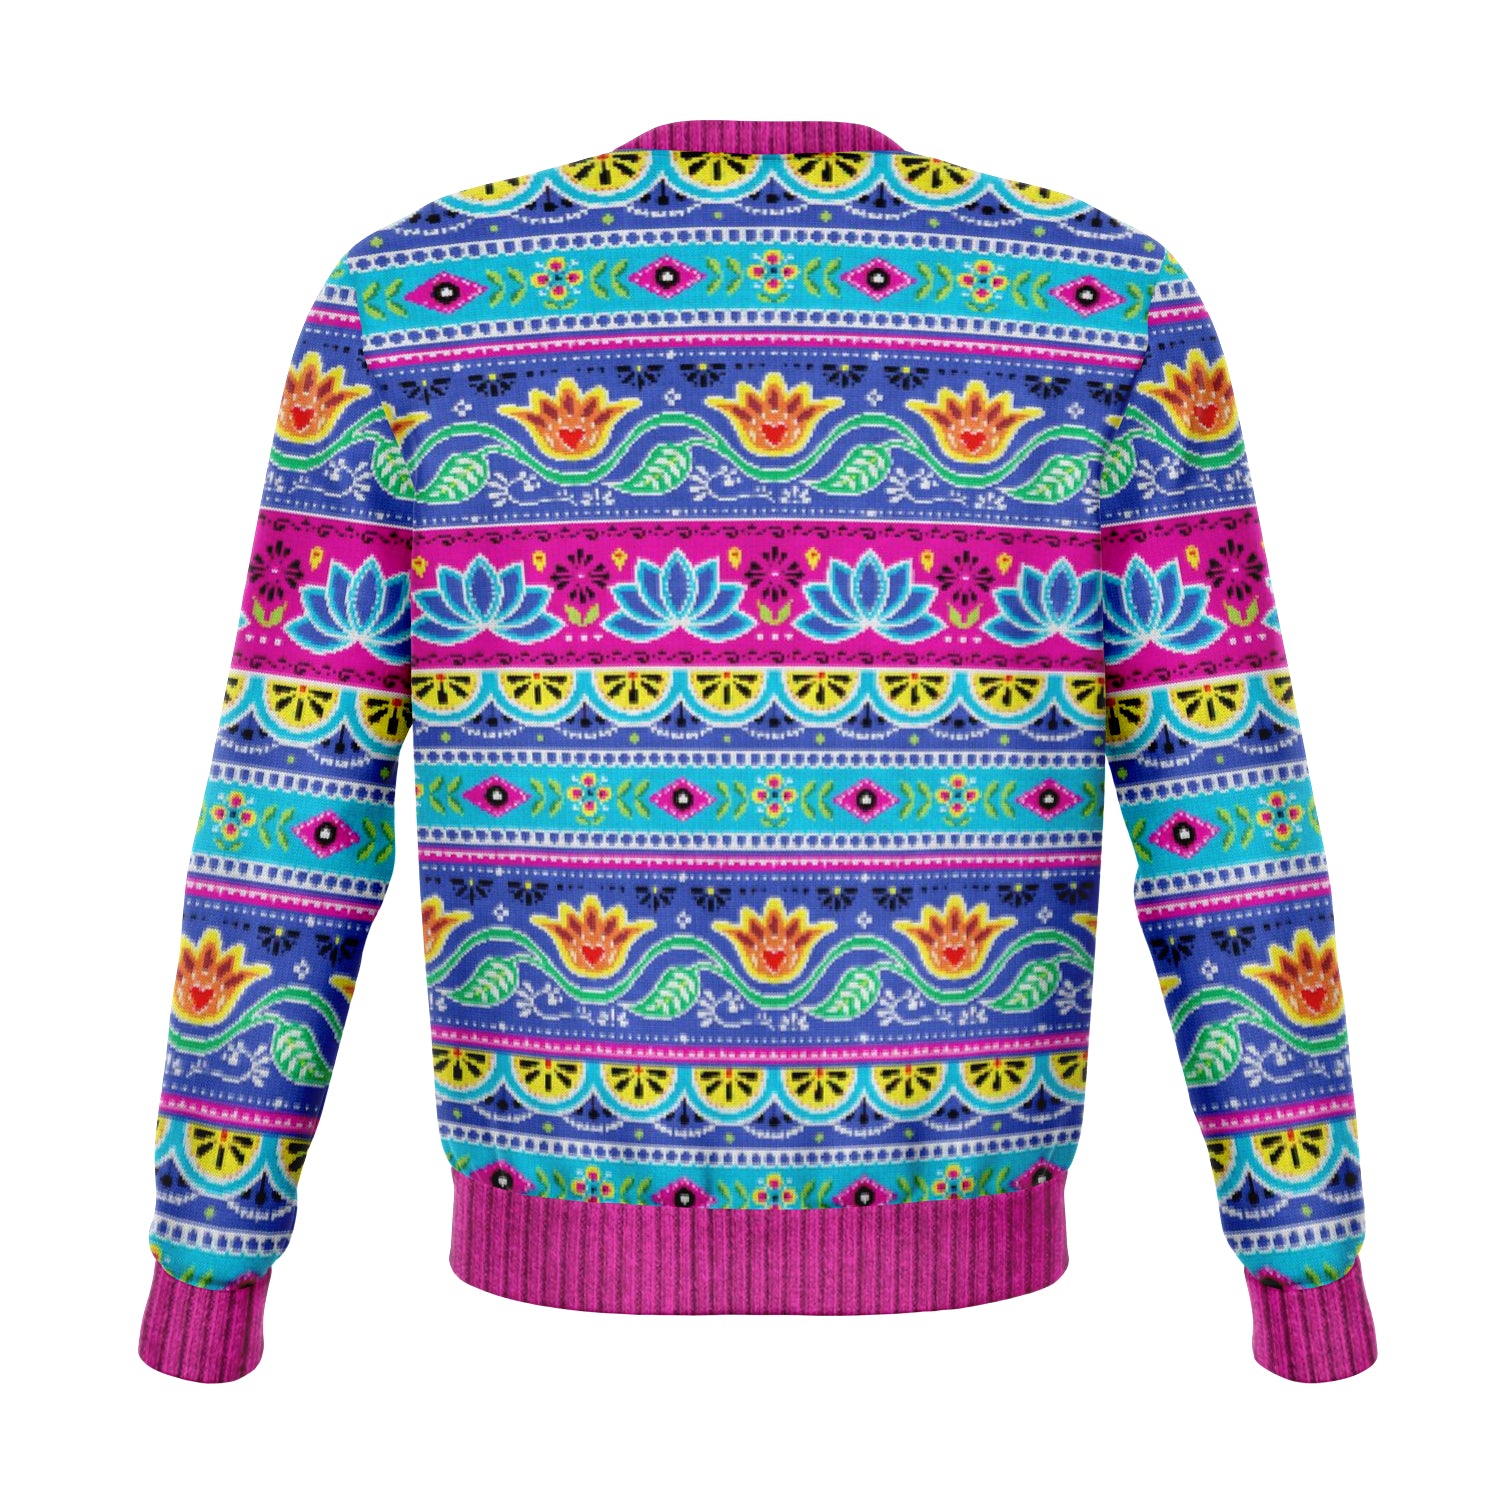 Om for Christmas - Ugly Christmas Sweater